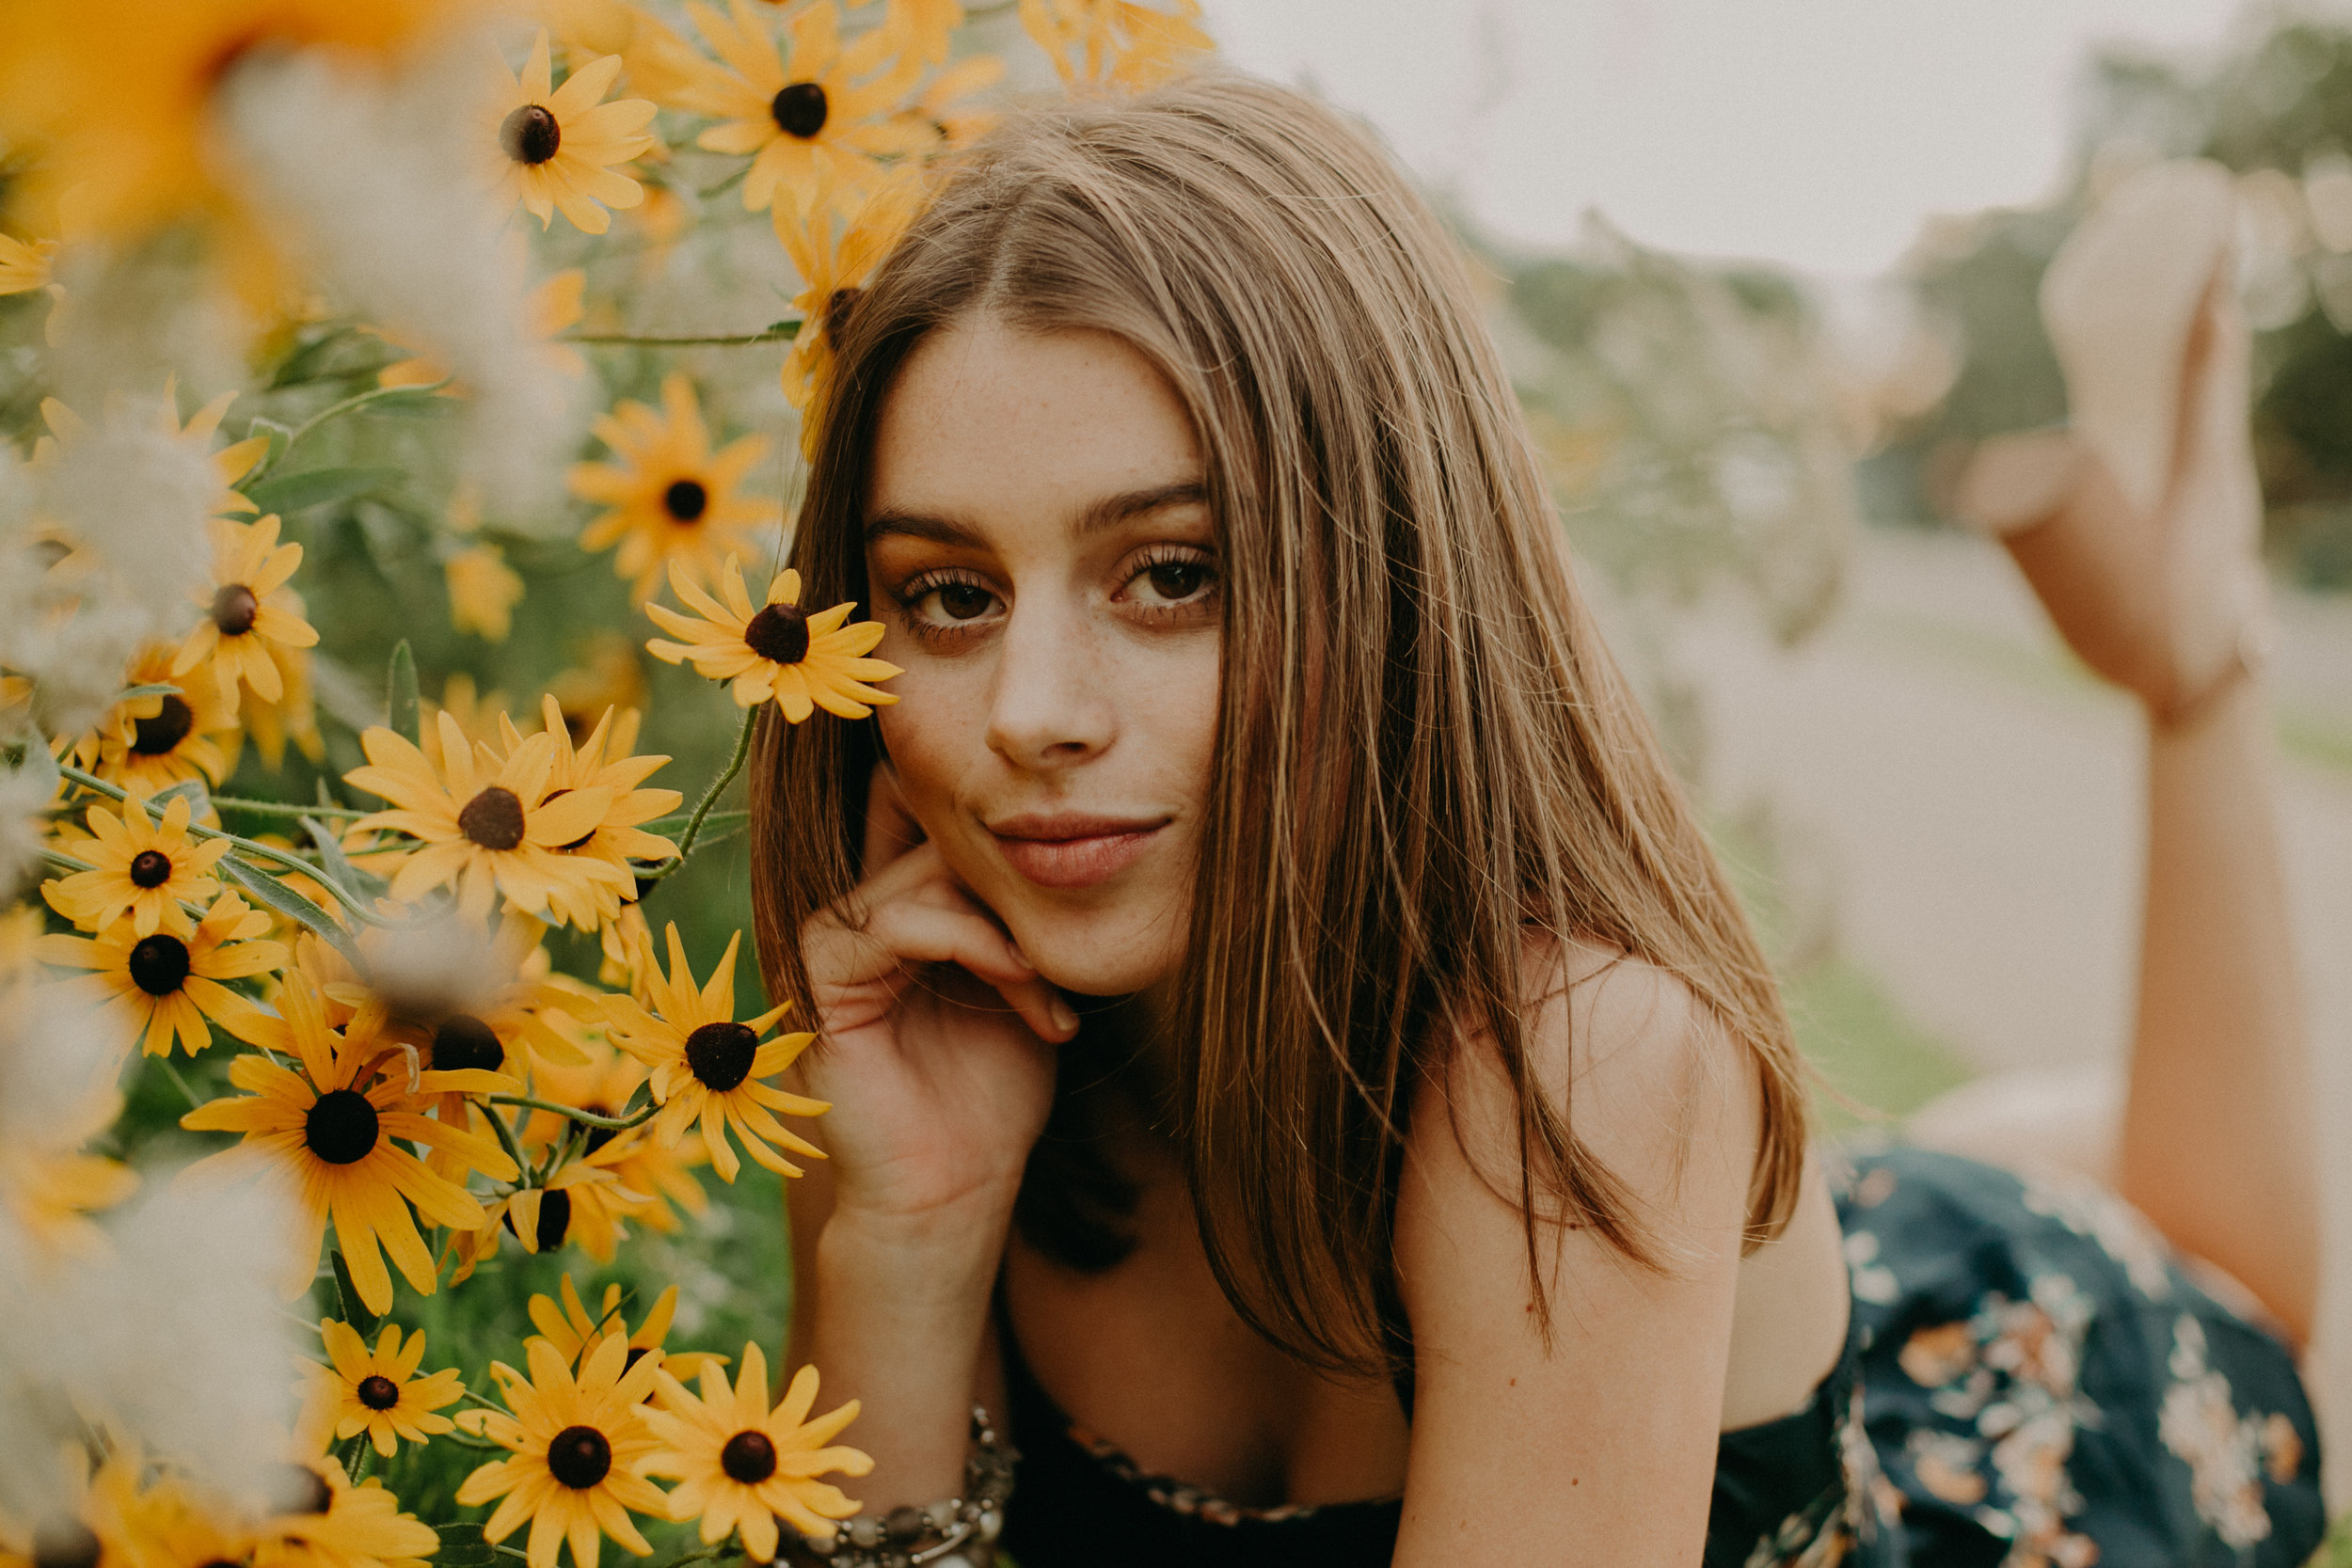  senior photography in a yellow flower field in Stillwater MN 